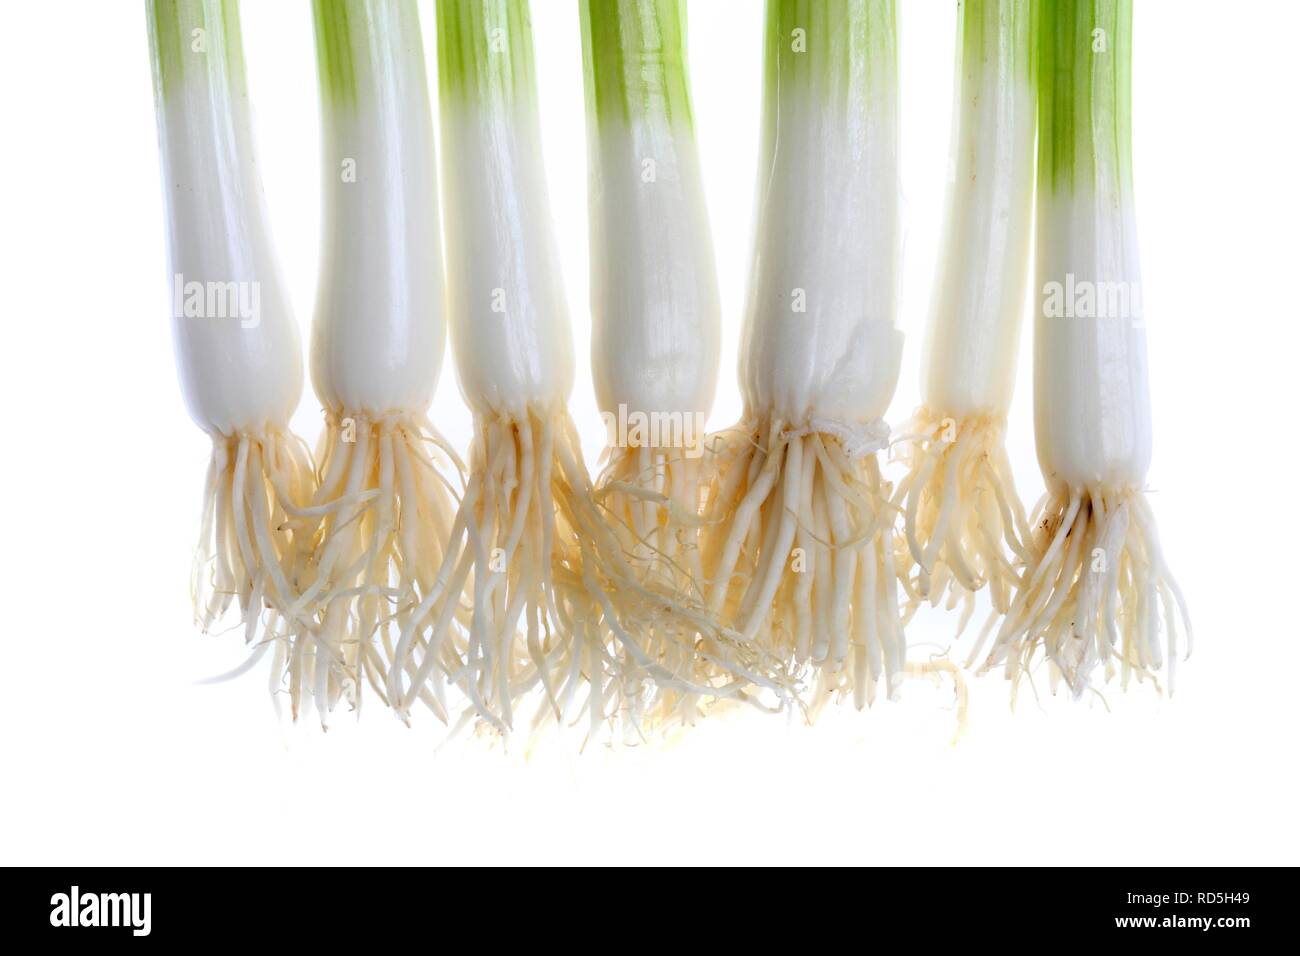 Le gallois l'oignon, l'oignon vert, l'oignon de printemps, escallion ou salade, oignon (Allium fistulosum) Banque D'Images